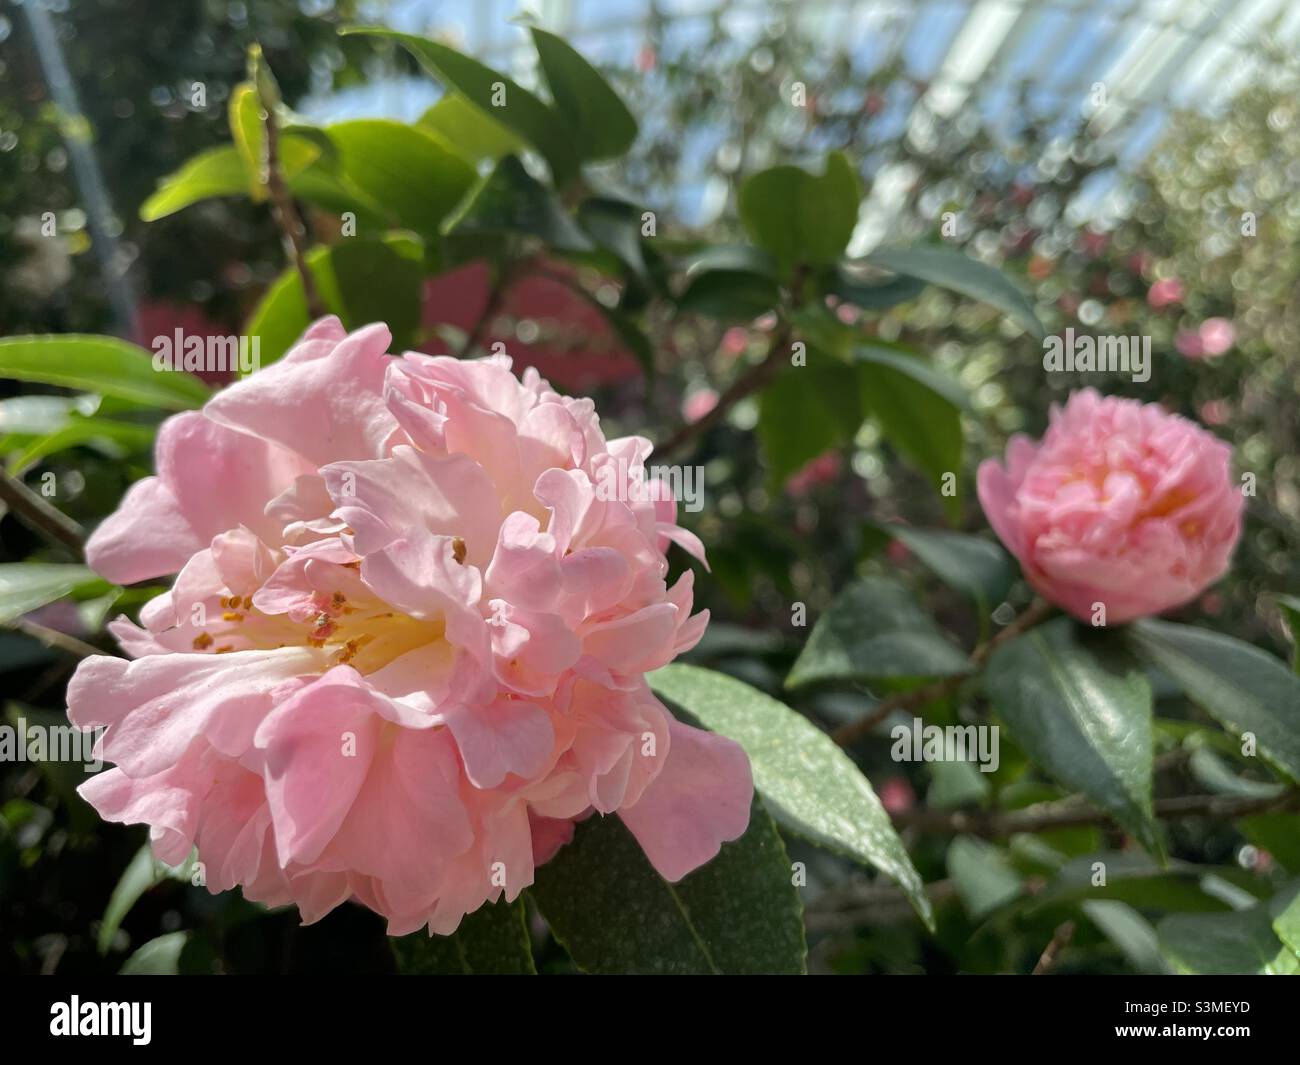 Dahlia blooms Stock Photo